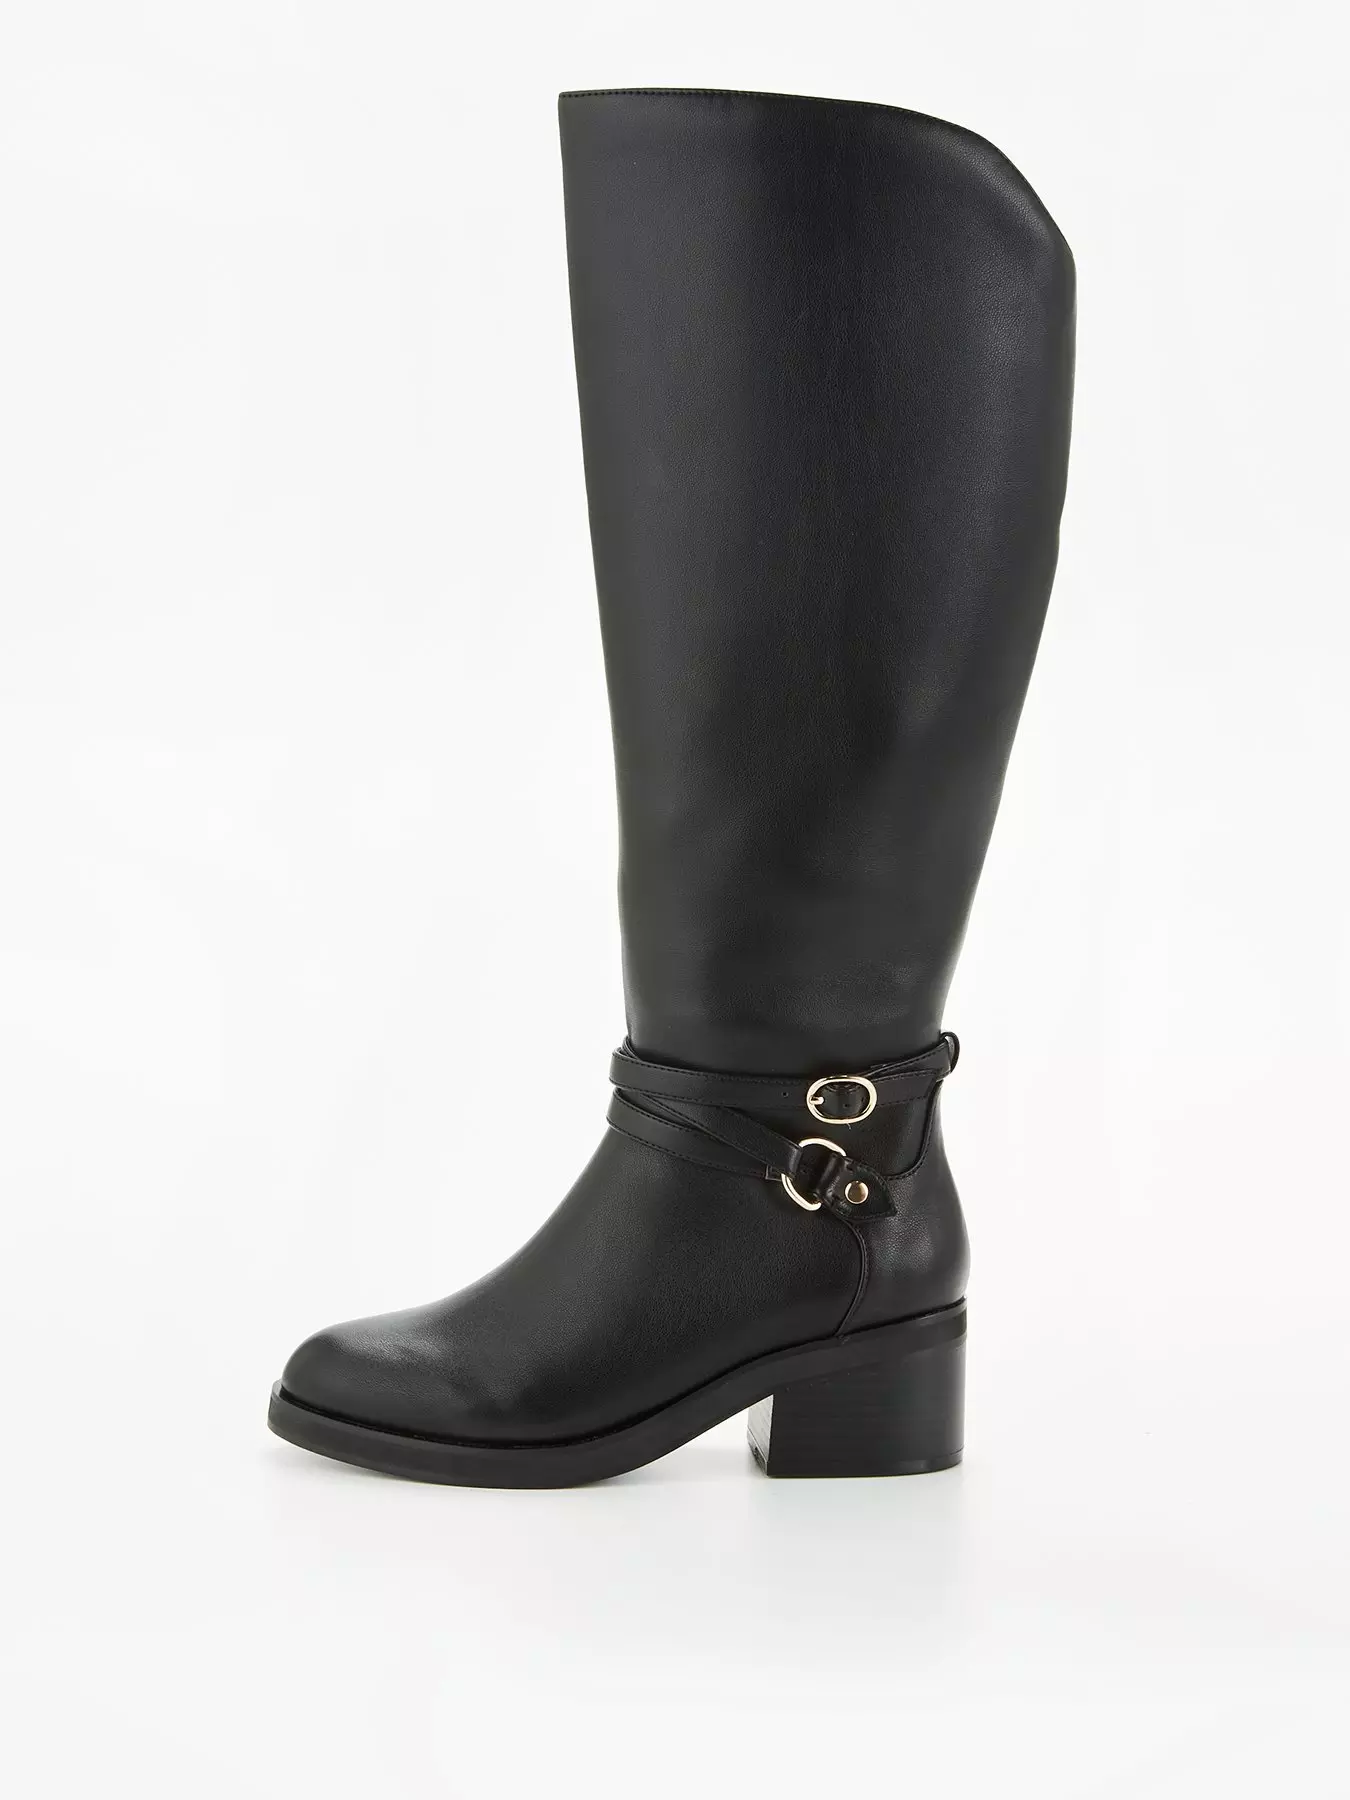 Women's White Round Block Heel Knee High Boots - Size 9